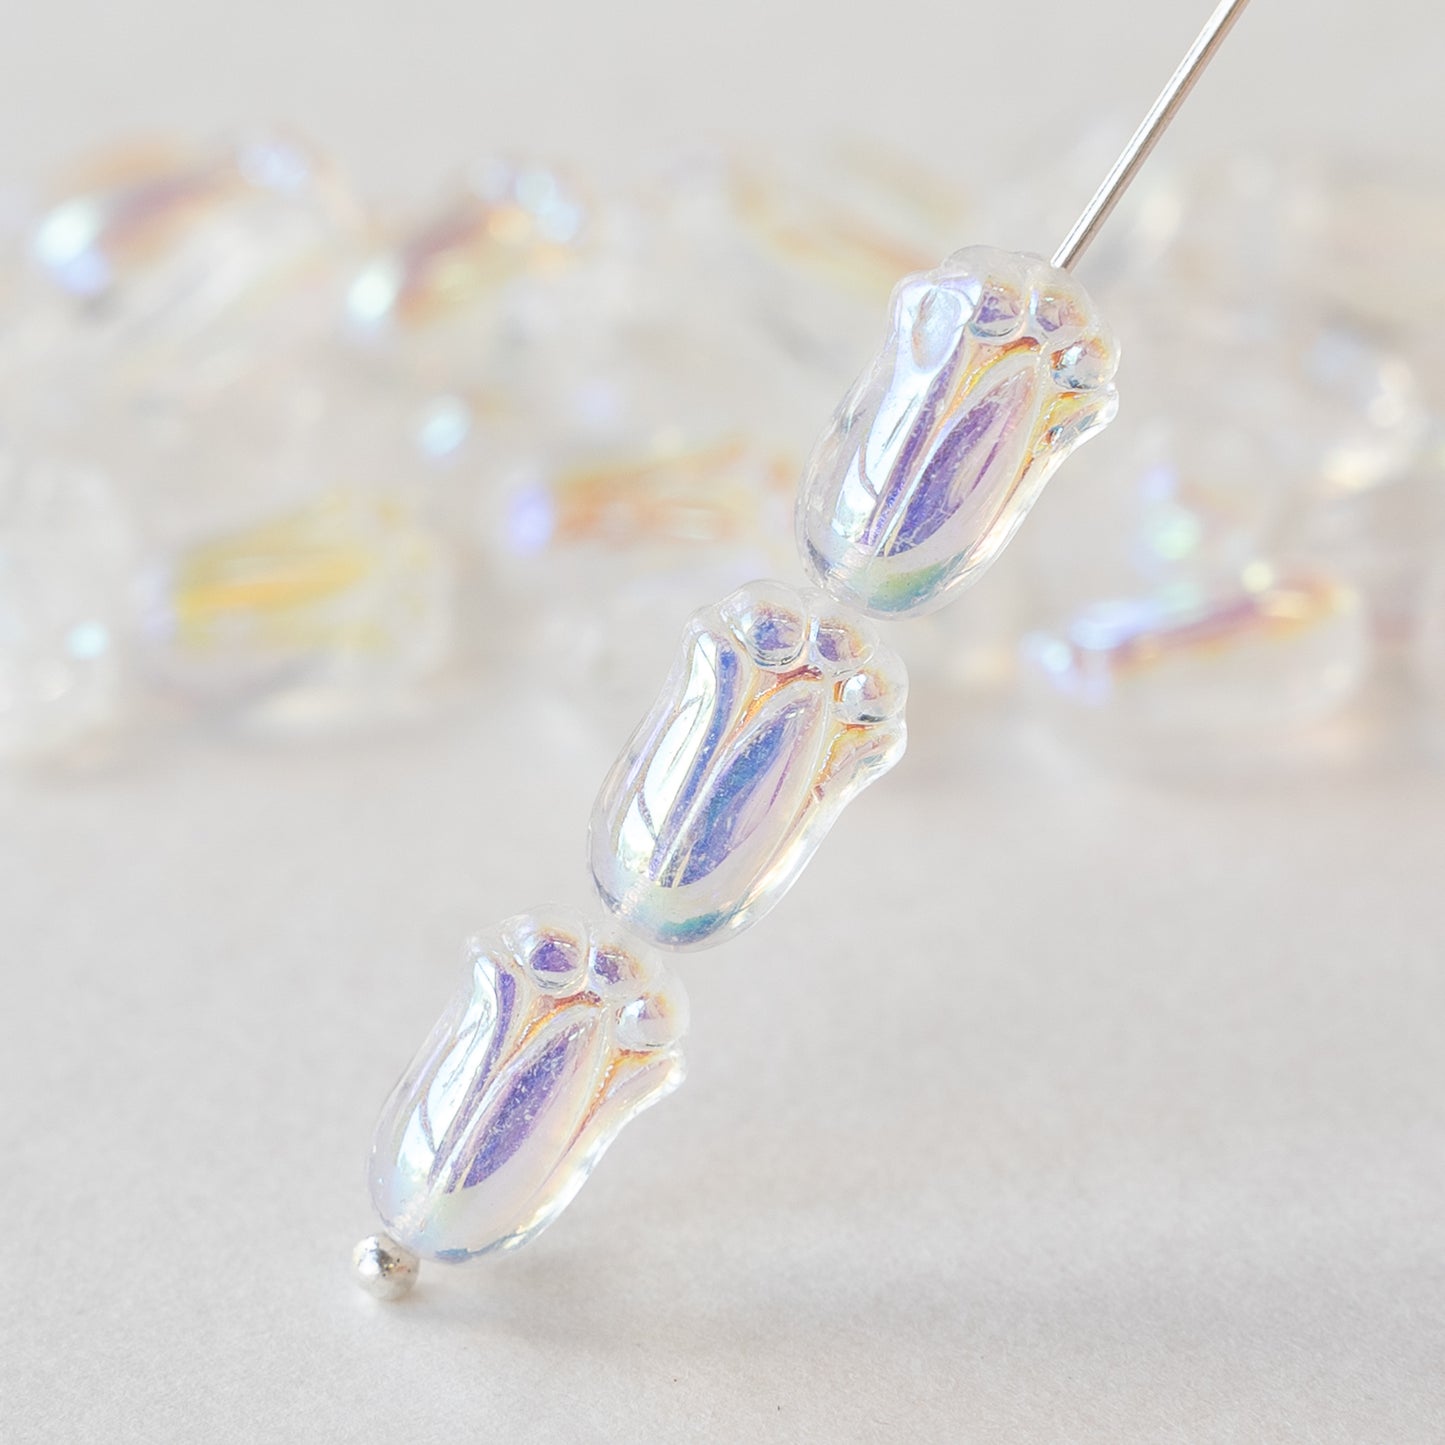 10mm Glass Tulip Beads - Crystal AB - 20 Beads